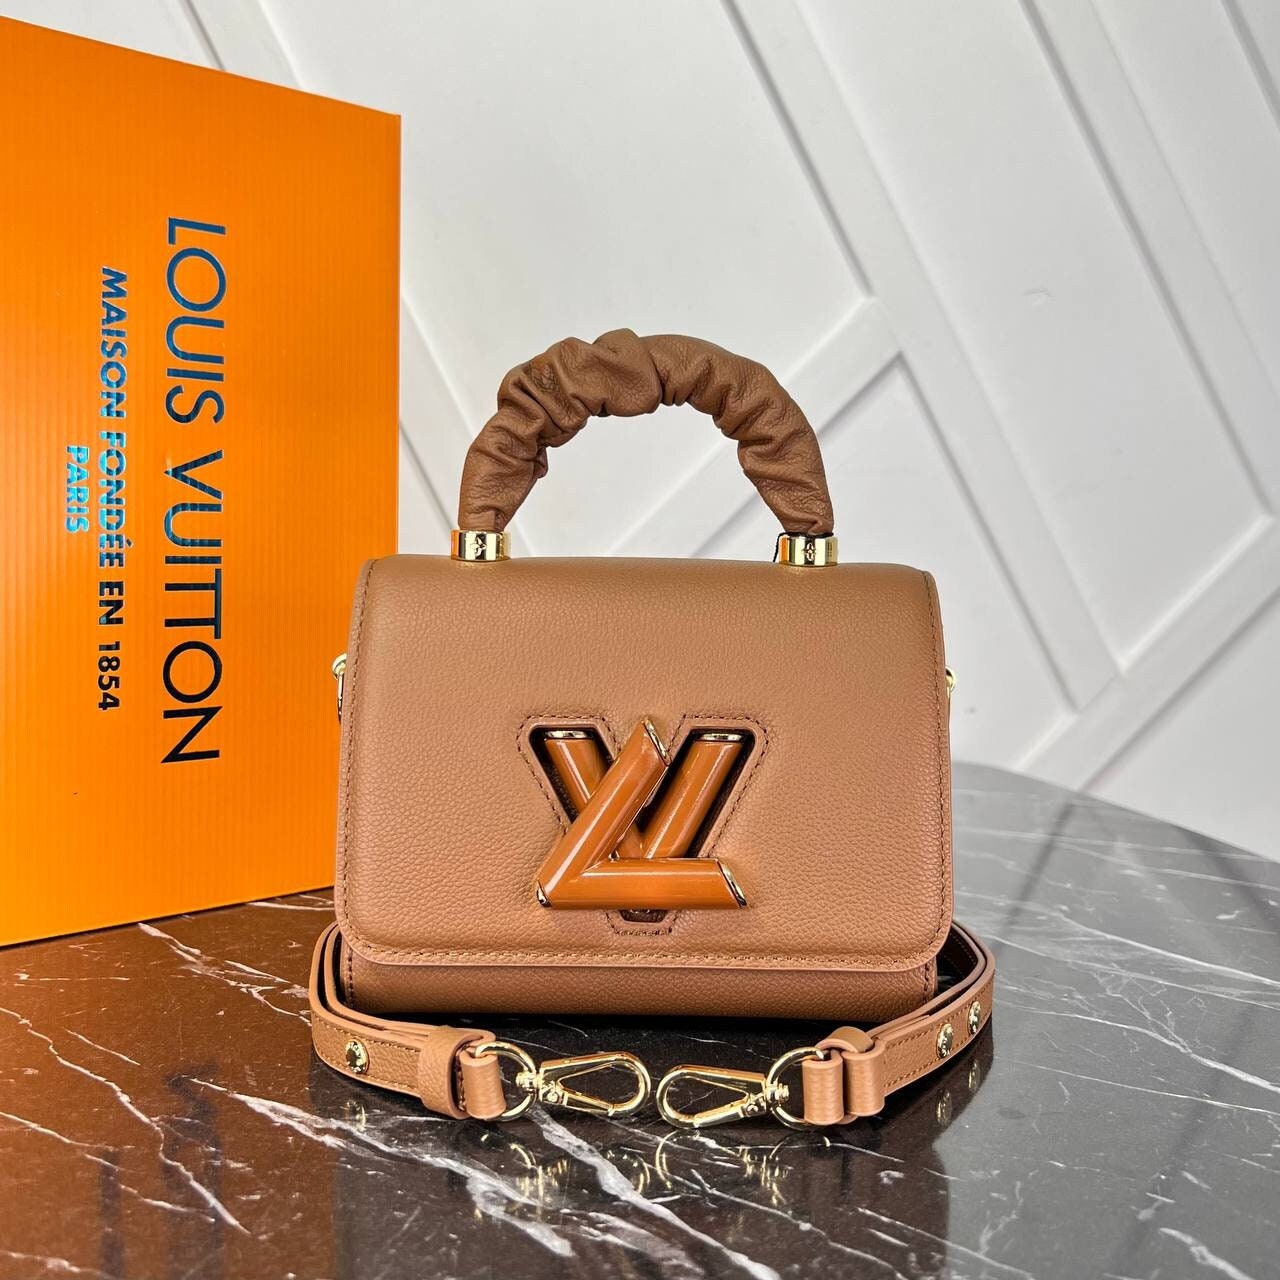 Louis Vuitton Twist MM Bag Review  Luxury Shopping at LV in Paris